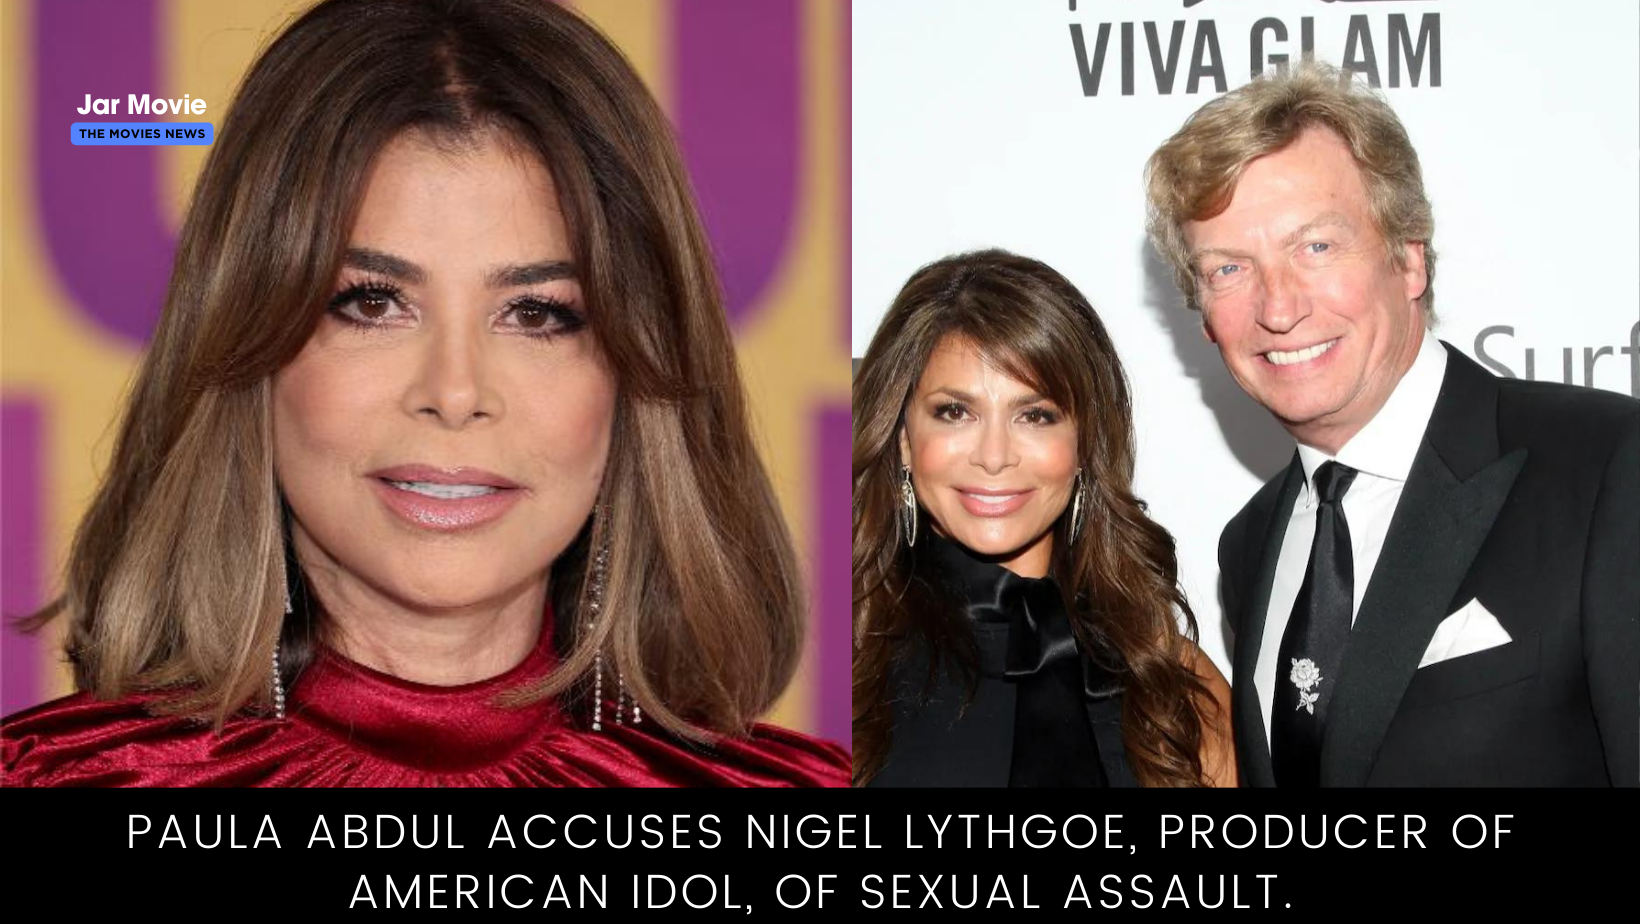 Paula Abdul accuses Nigel Lythgoe, producer of American Idol, of sexual assault.